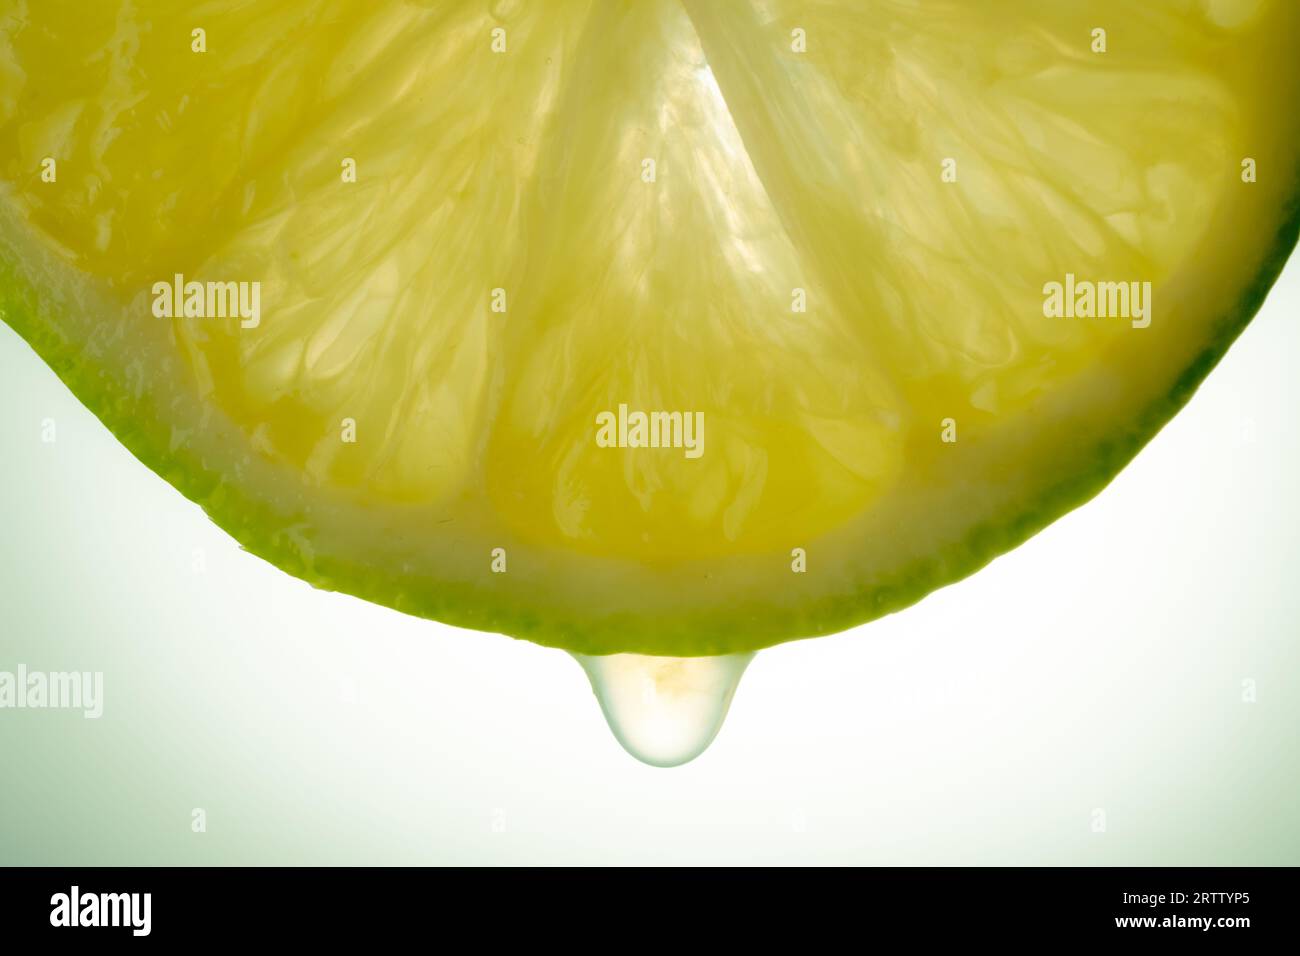 closeup photo of lemon slice with juice drop Stock Photo